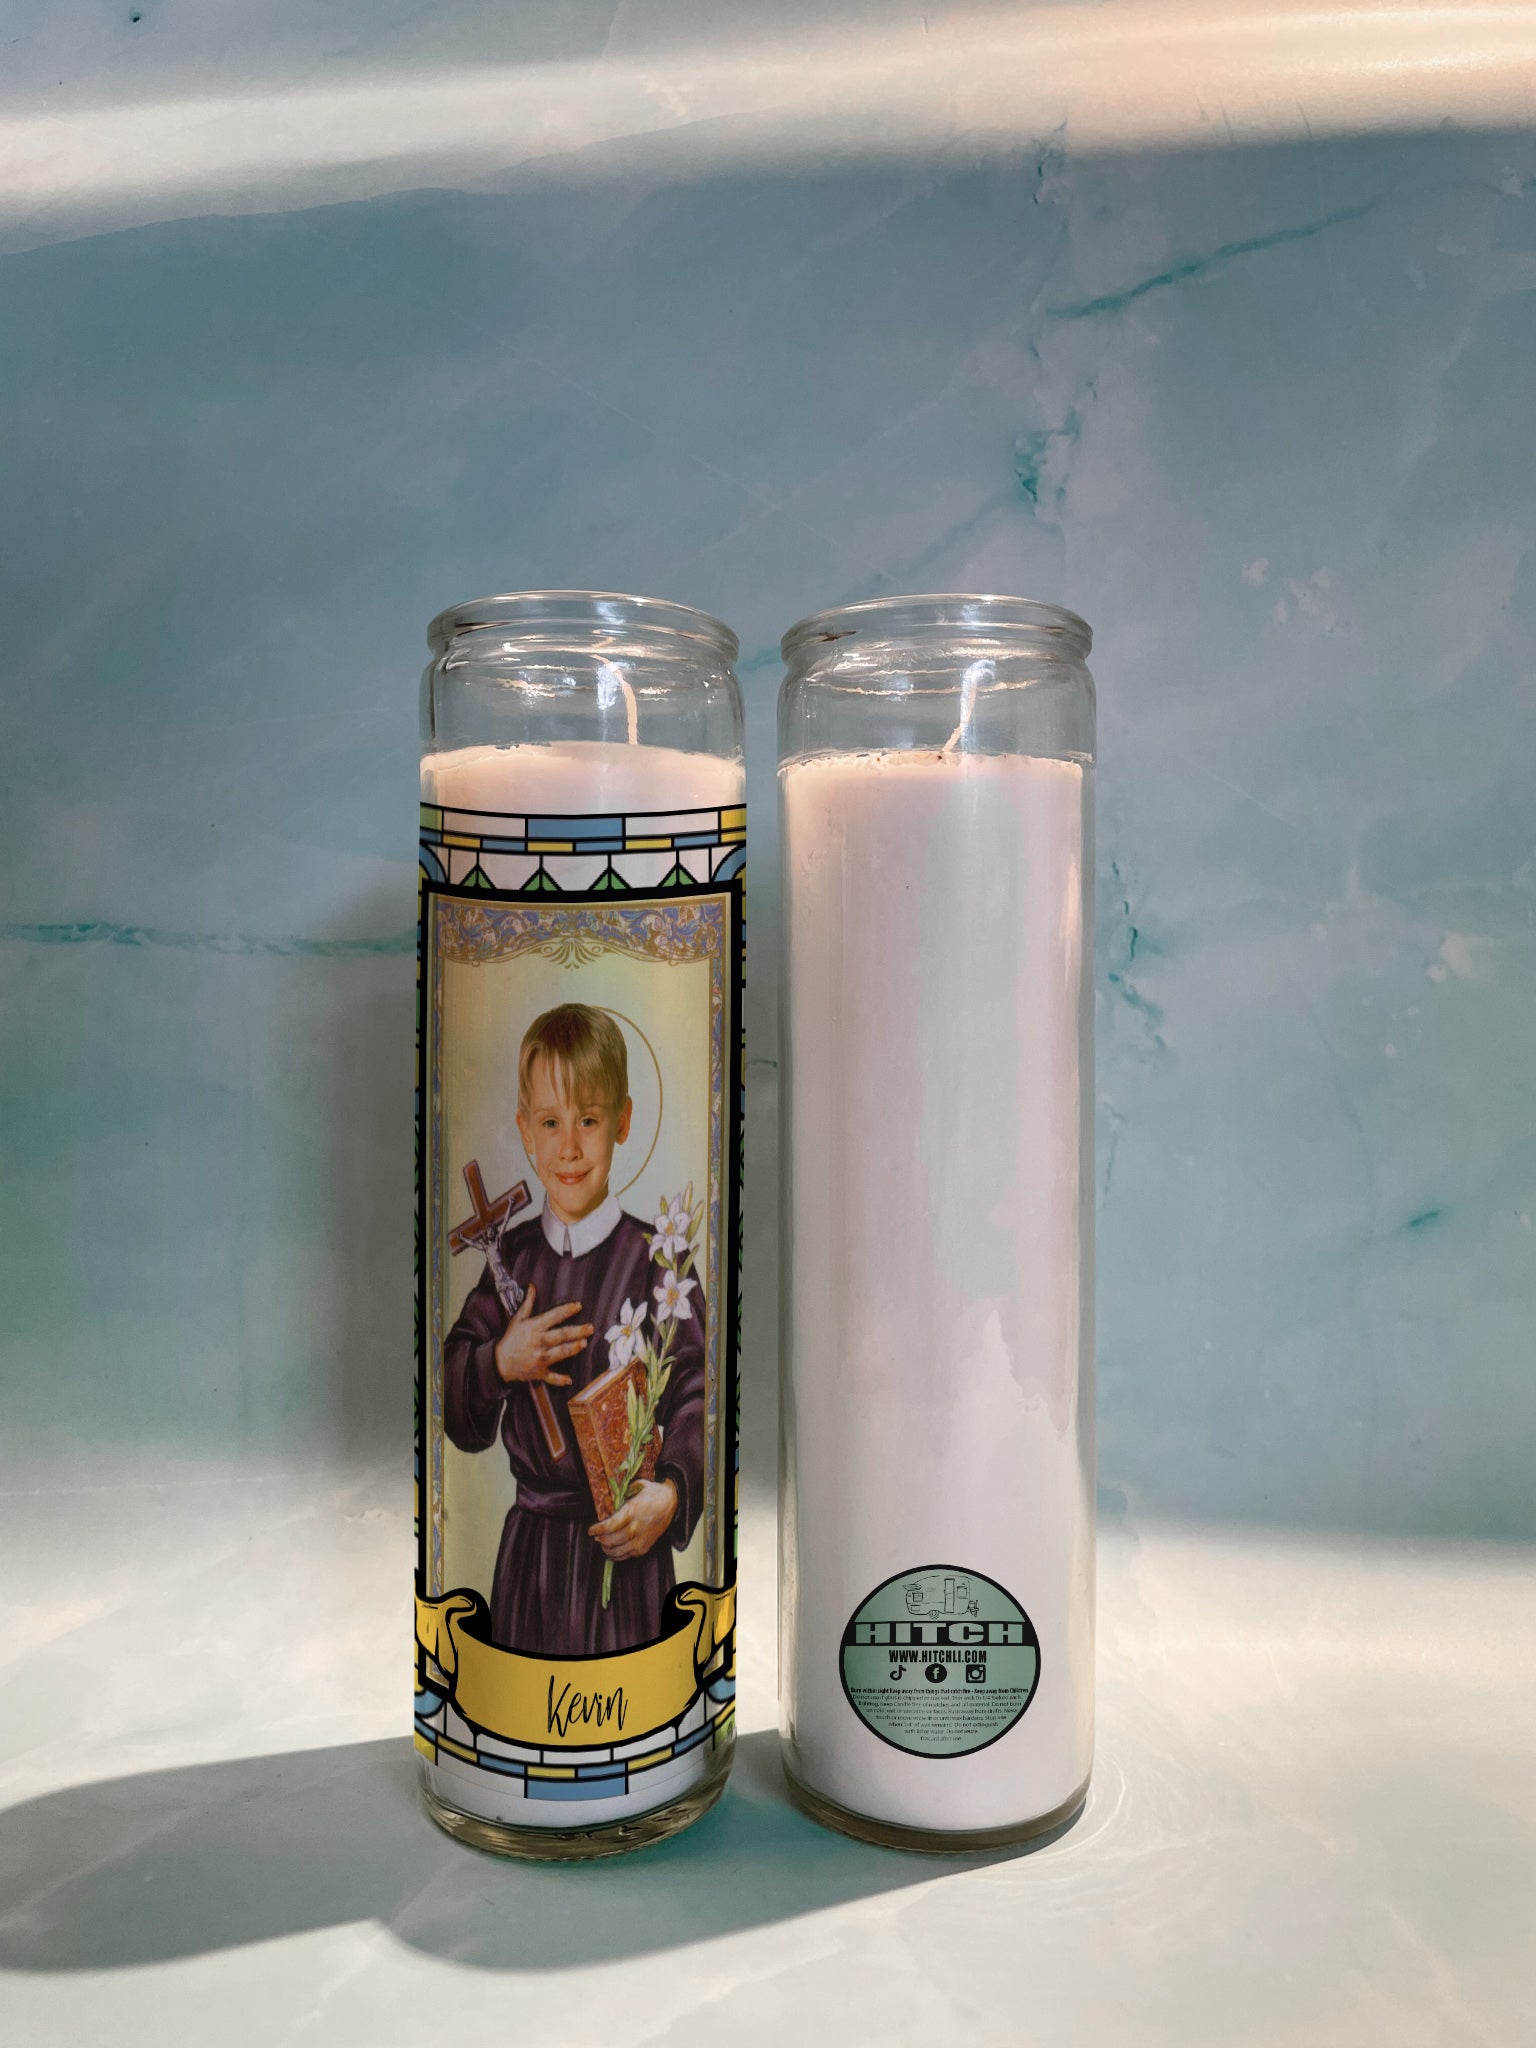 Kevin (Home Alone) Original Prayer Candle